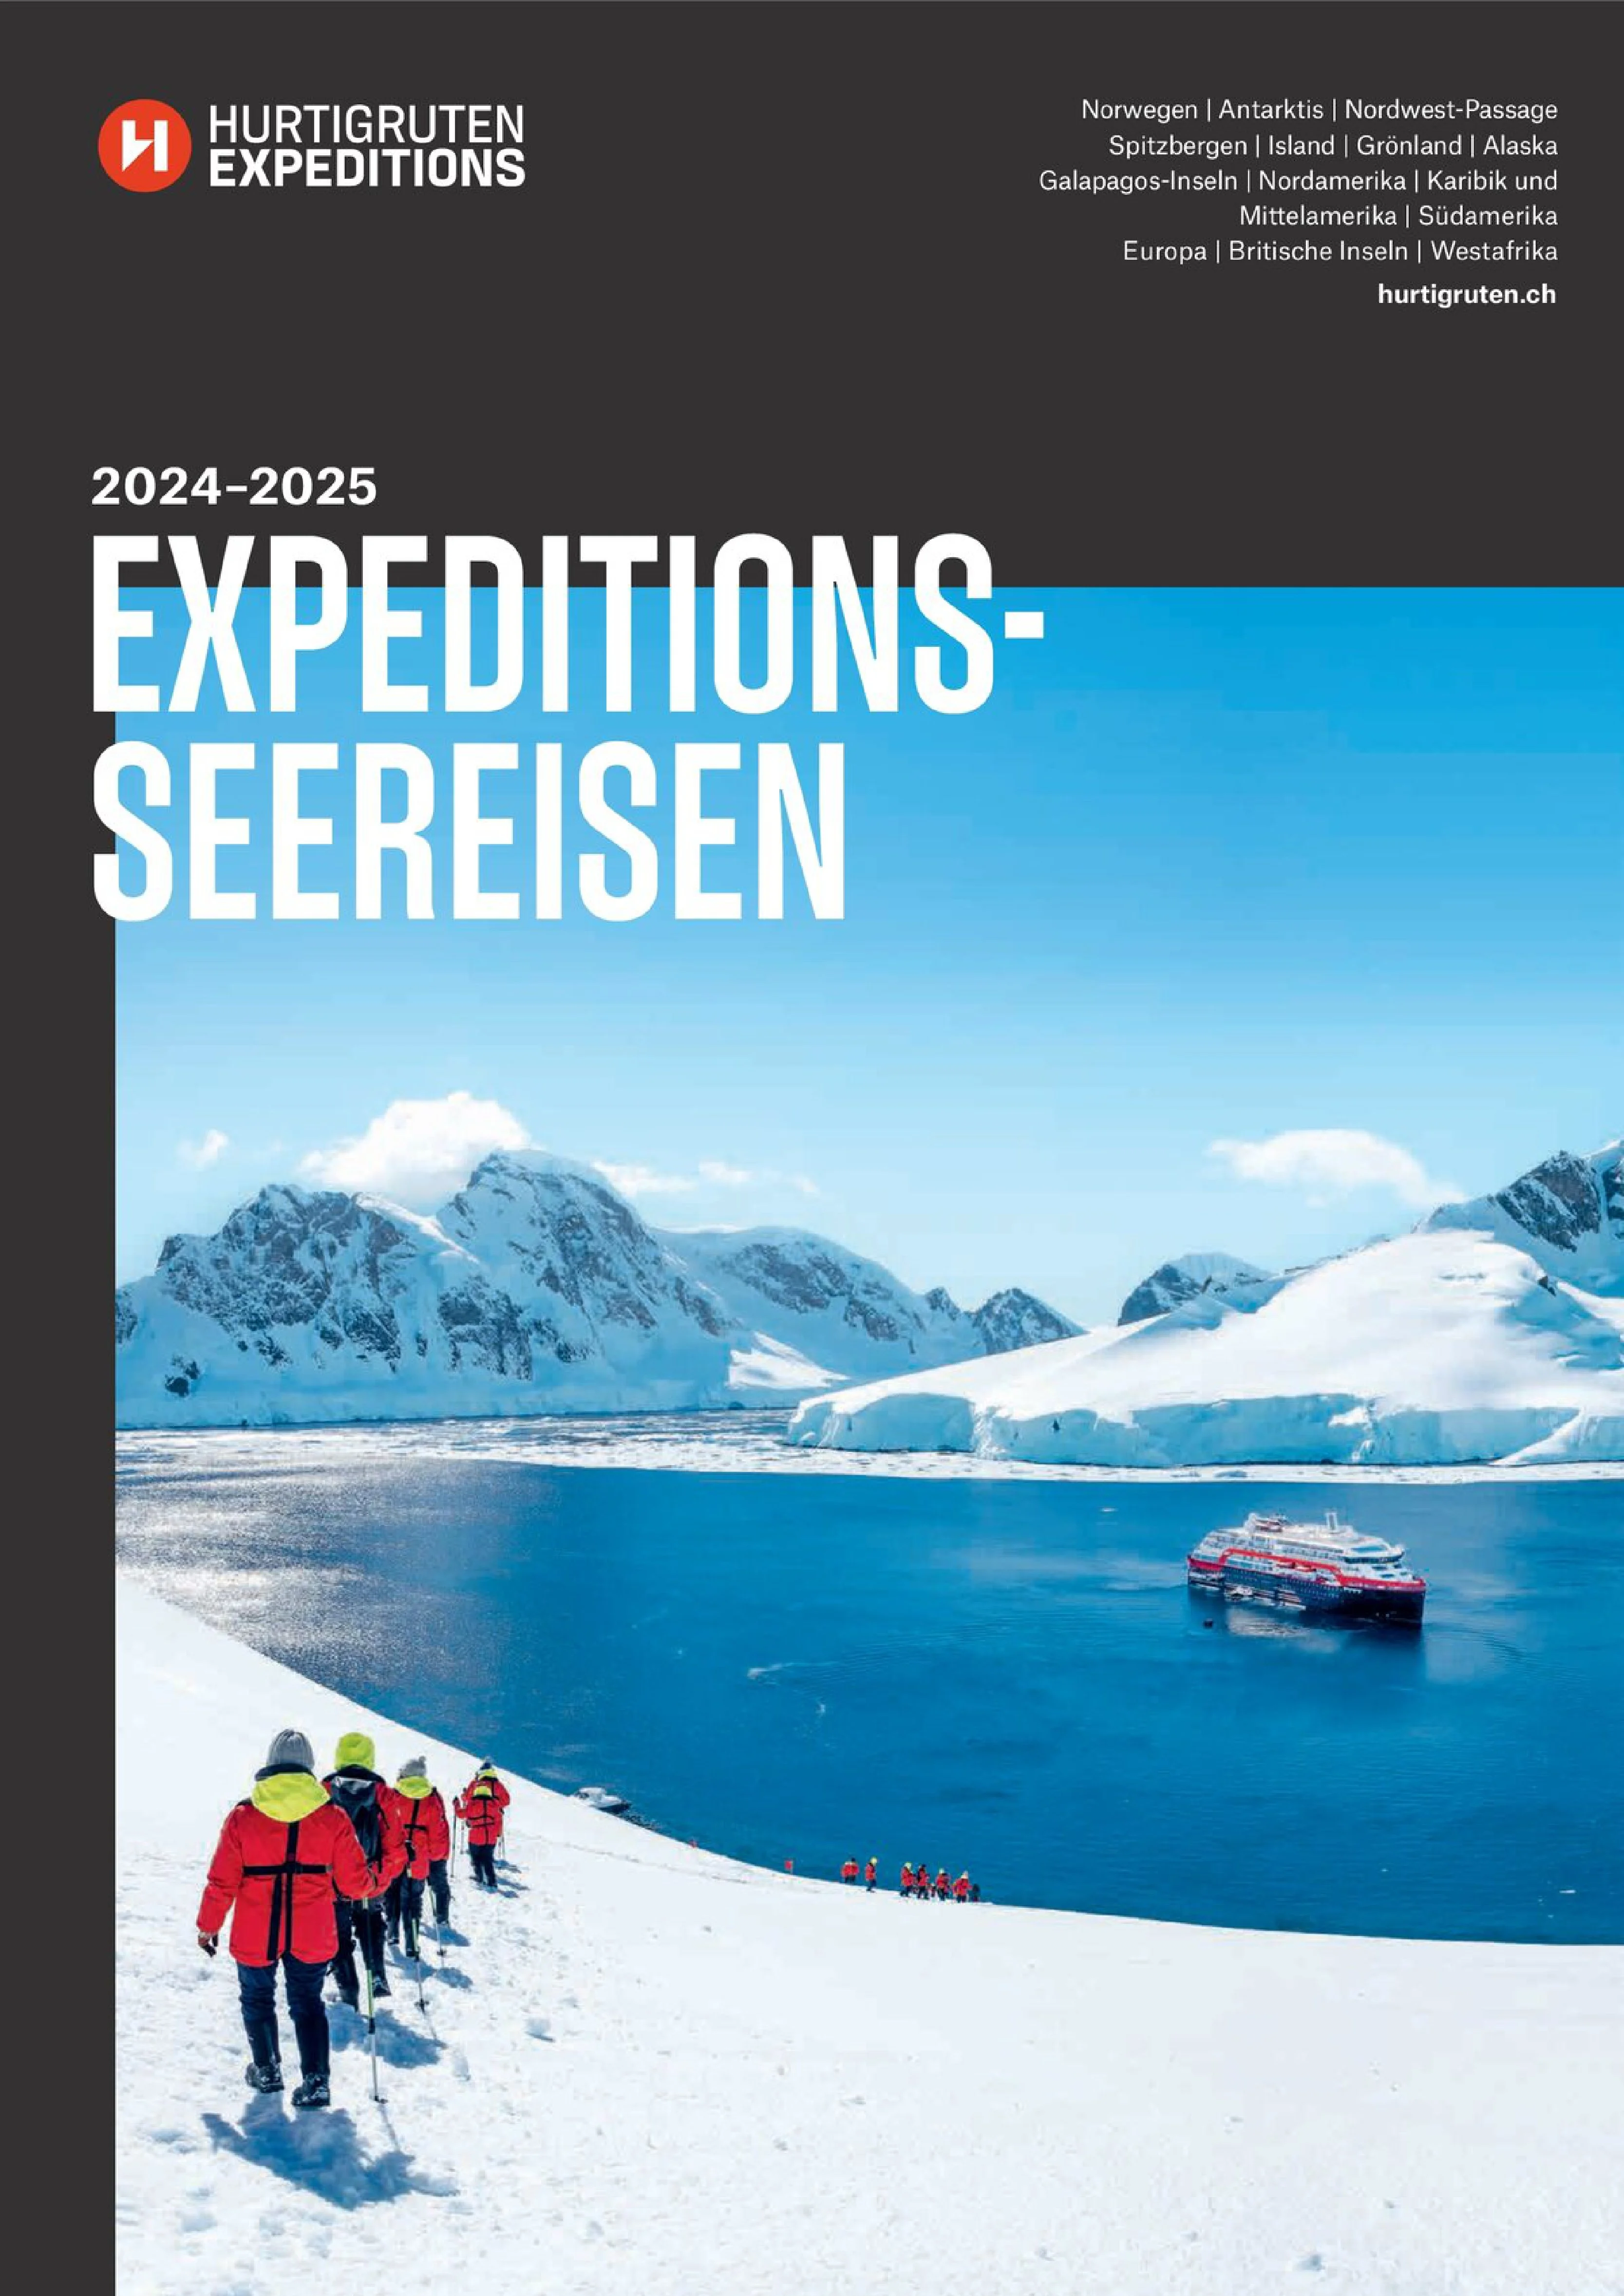 NEU: Katalog Expeditions-Seereisen, Saison 2024-2025